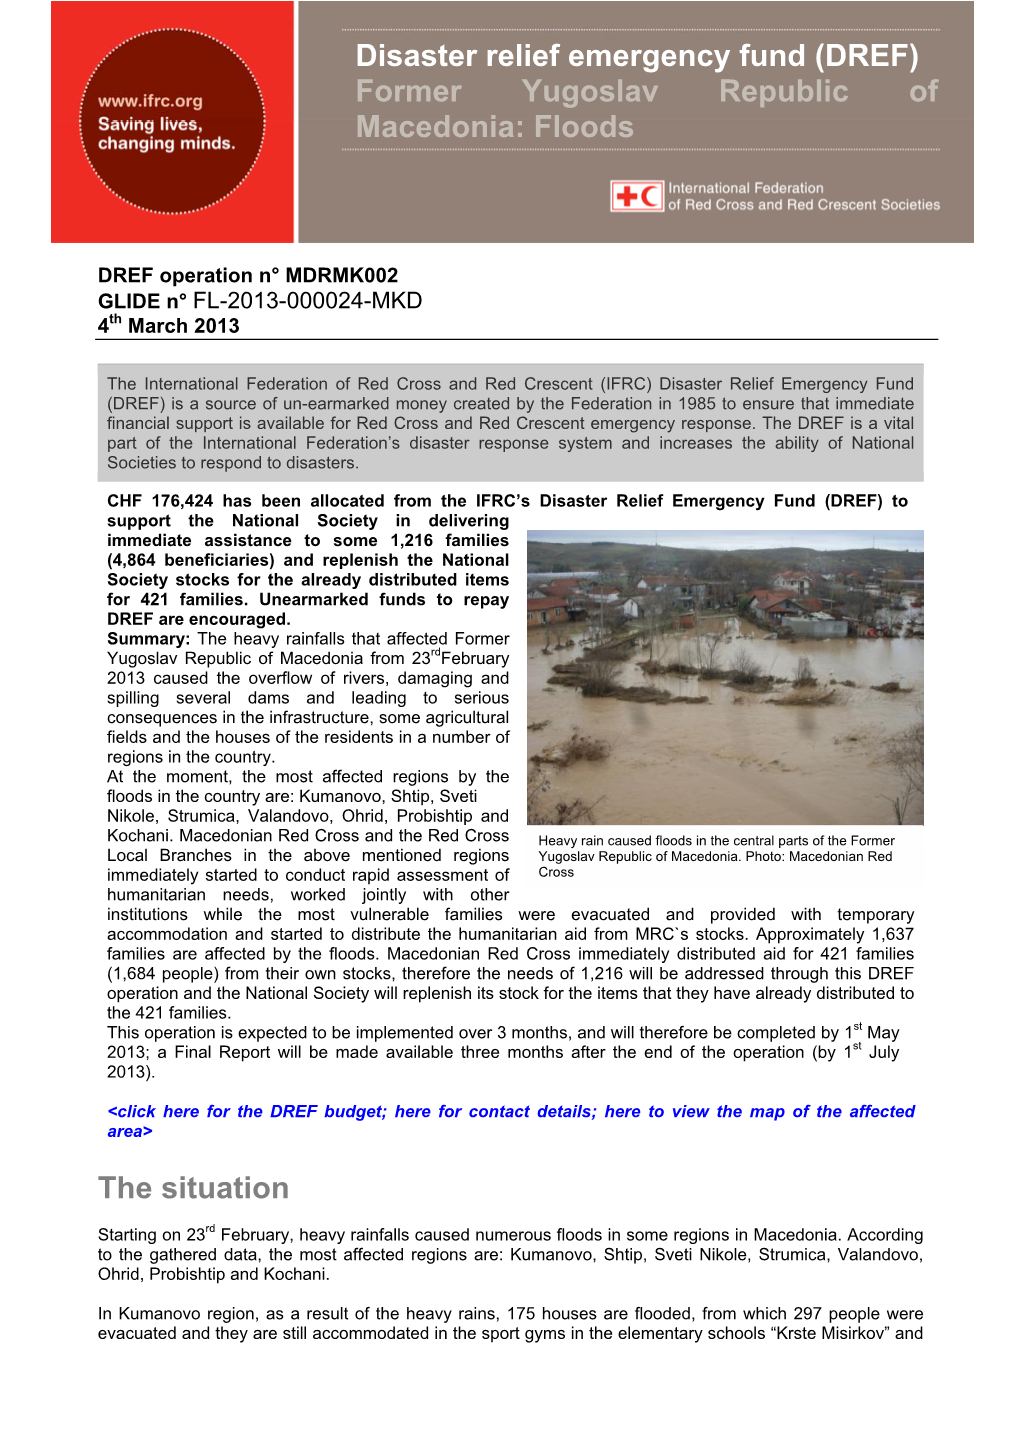 Former Yugoslav Republic of Macedonia: Floods